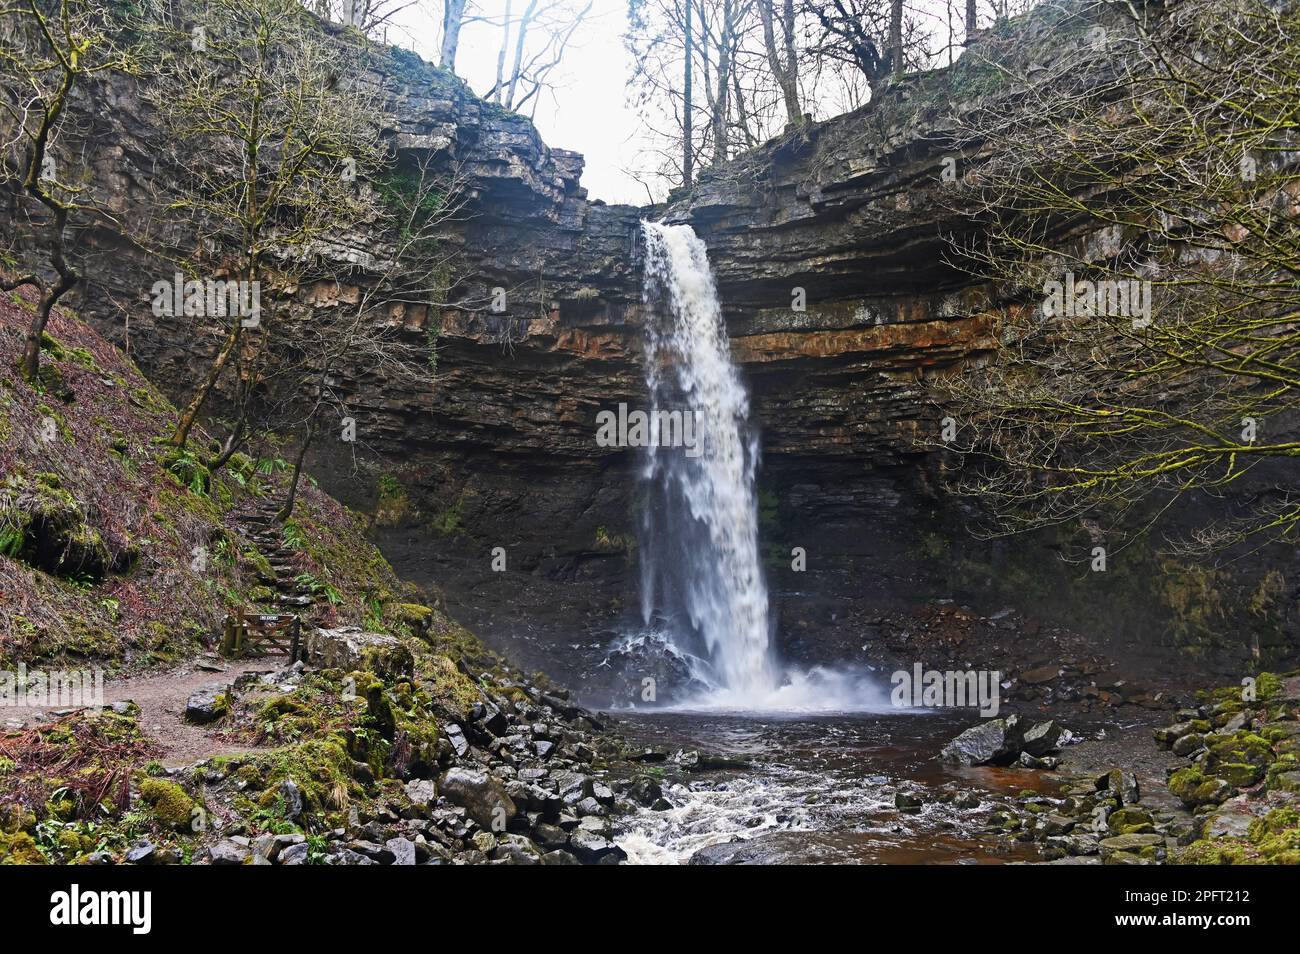 Hardraw Force waterfall. Wensleydale, Yorkshire Dales National Park, Yorkshire, England, United Kingdom, Europe. Stock Photo